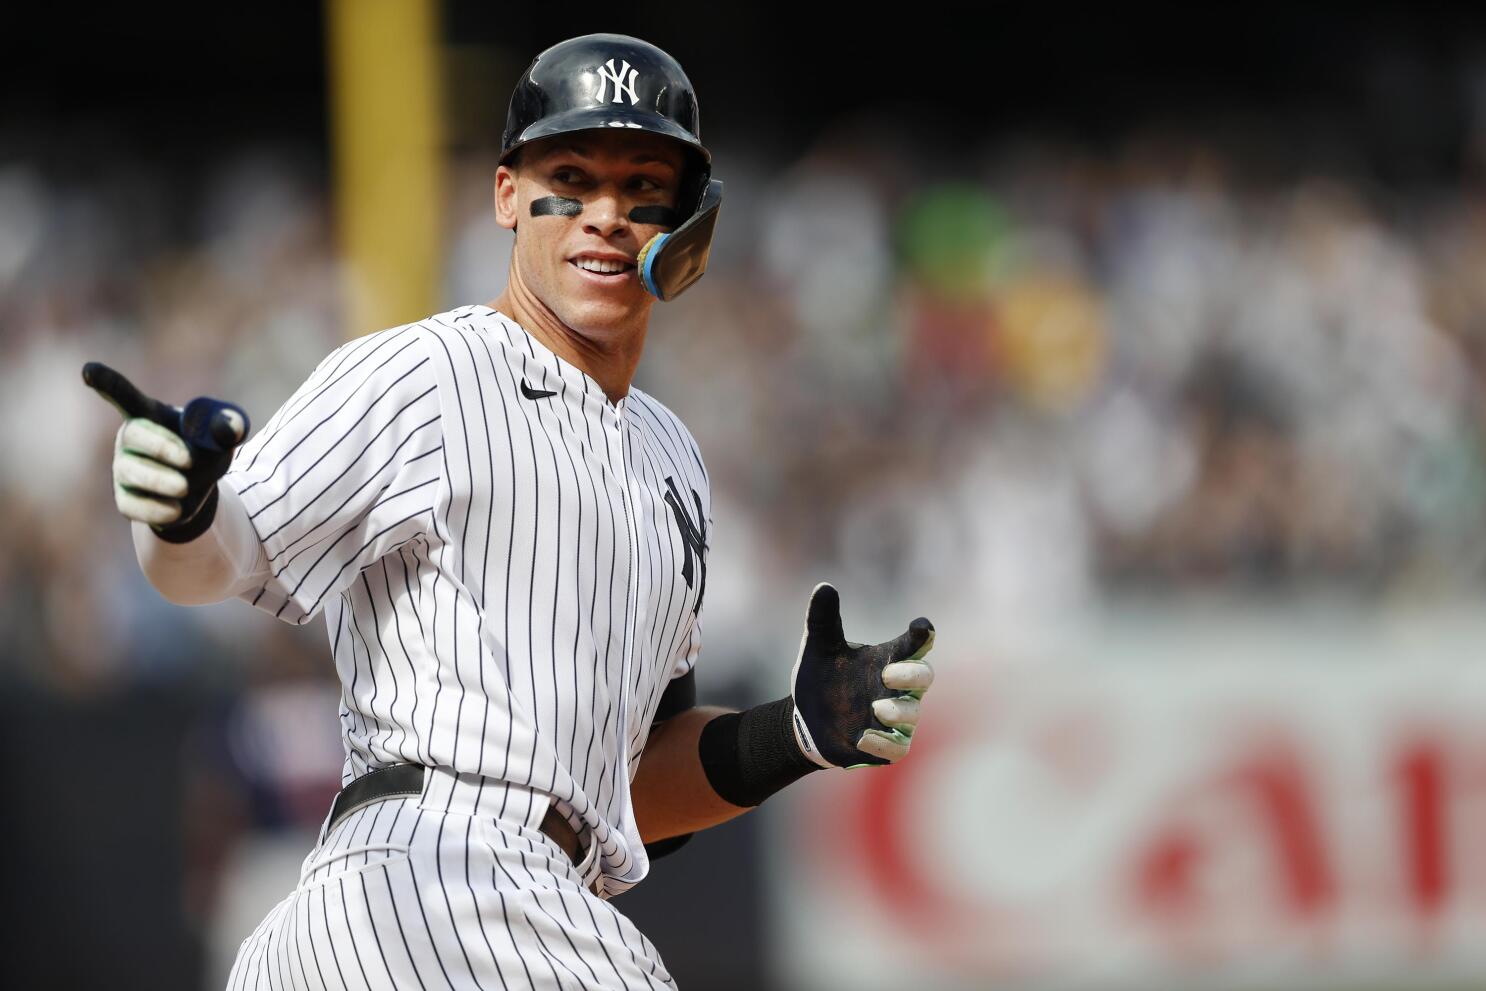 MLB, sports world reacts after Yankees' Aaron Judge hits AL record